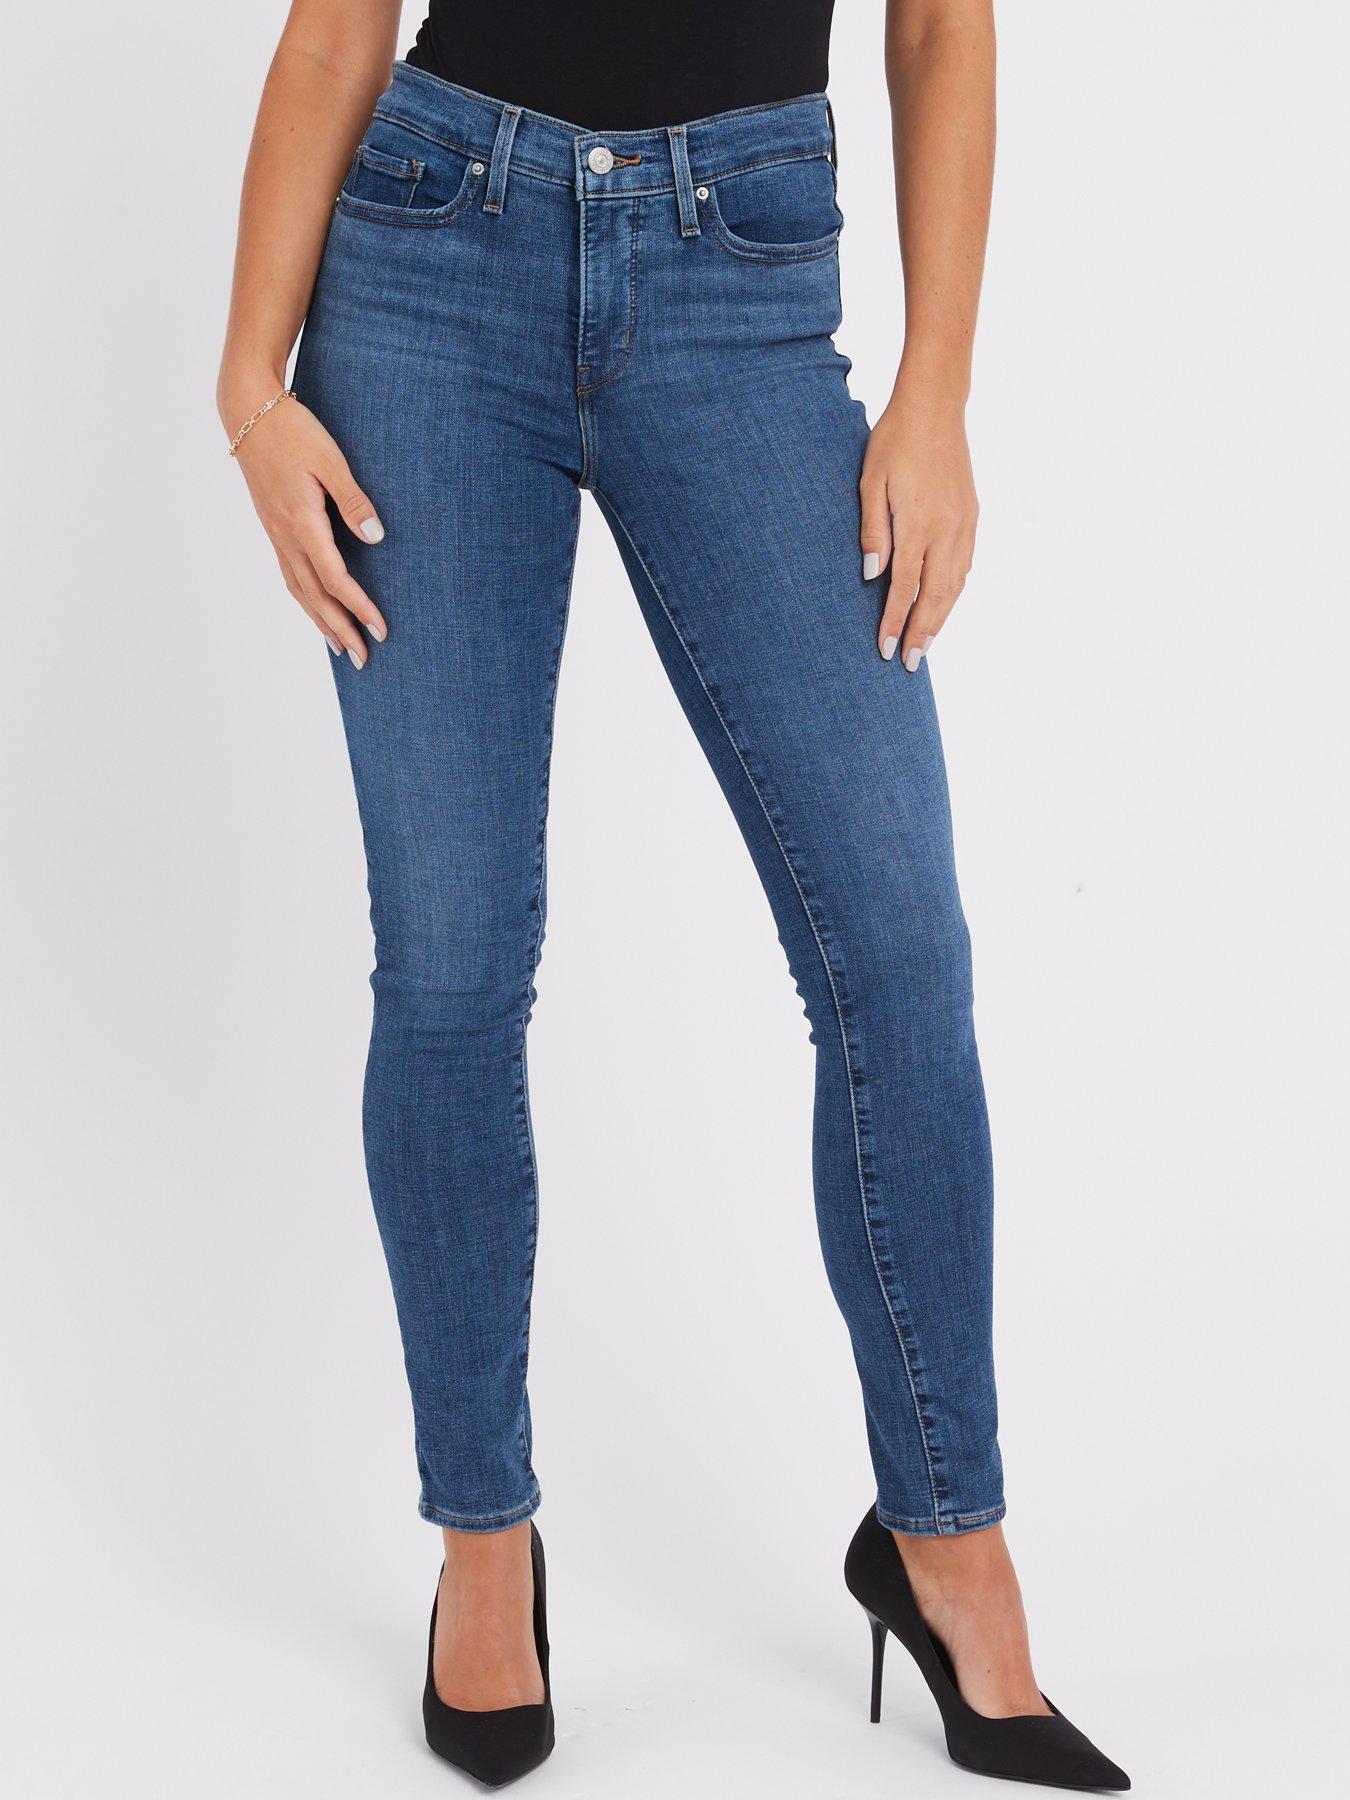 Levi's Women's Plus-Size 311 Shaping Skinny Jeans, Lapis Gallop